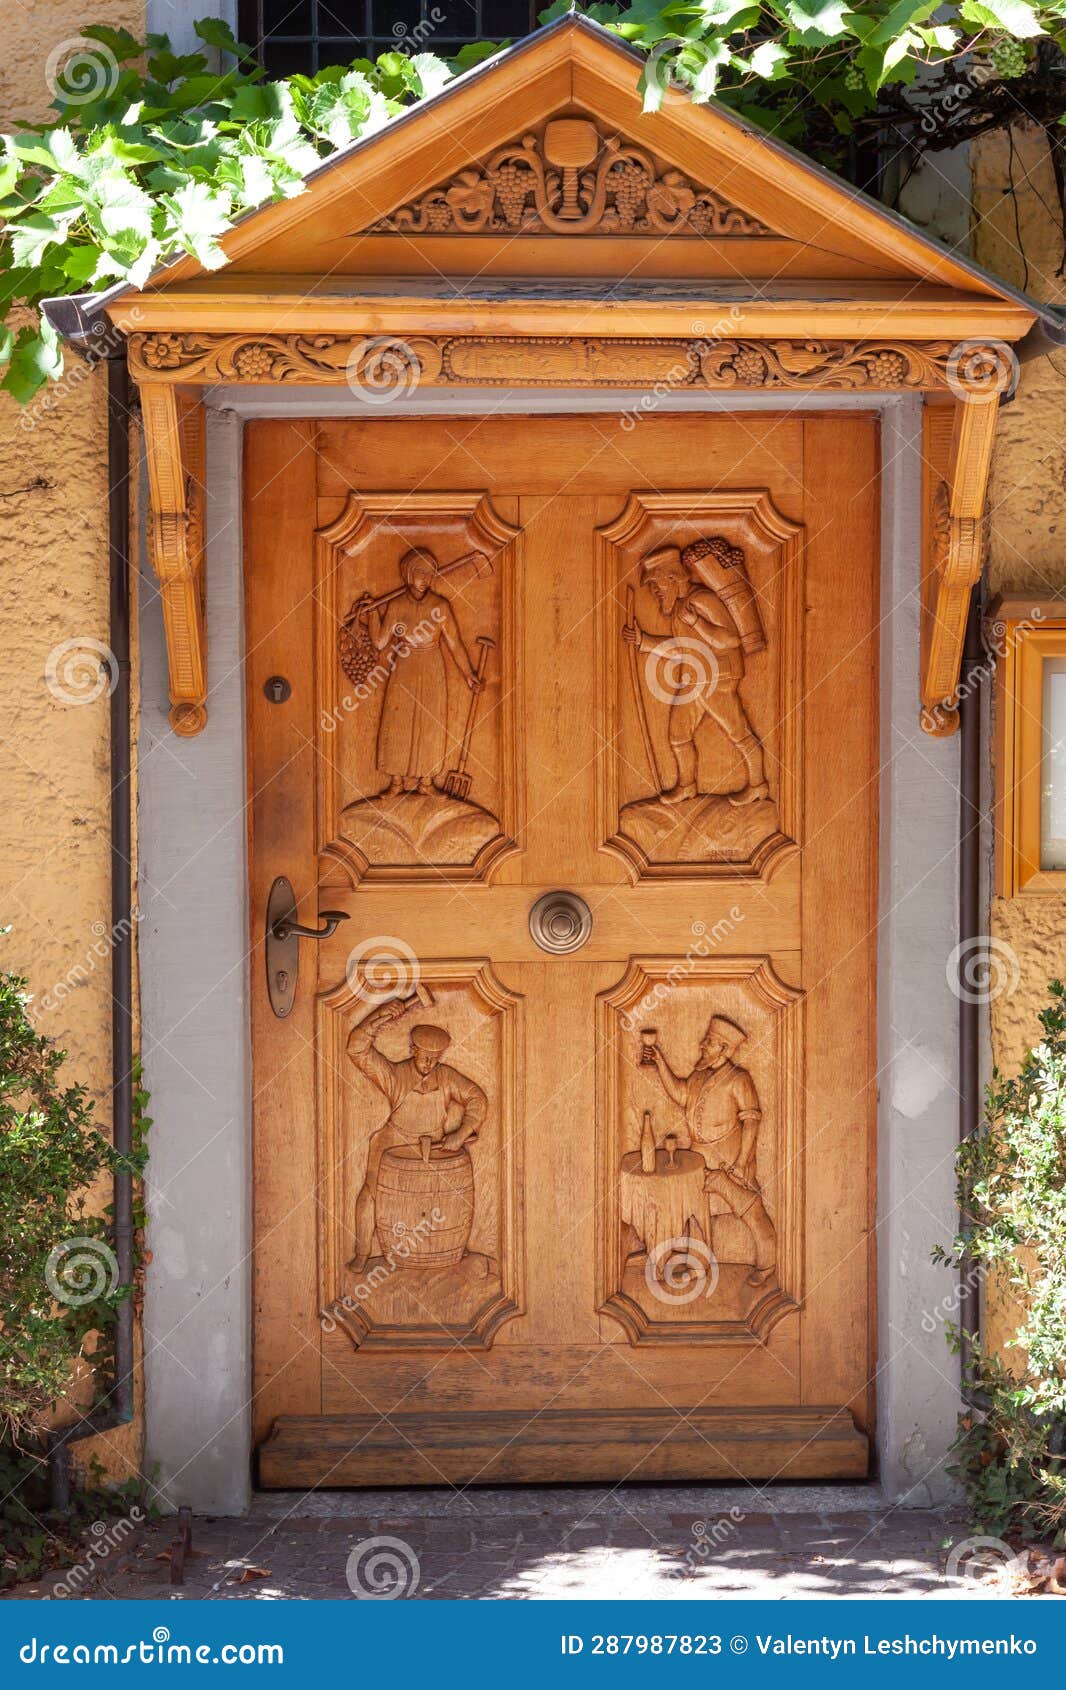 wooden door with carvings of people depicting winemakers